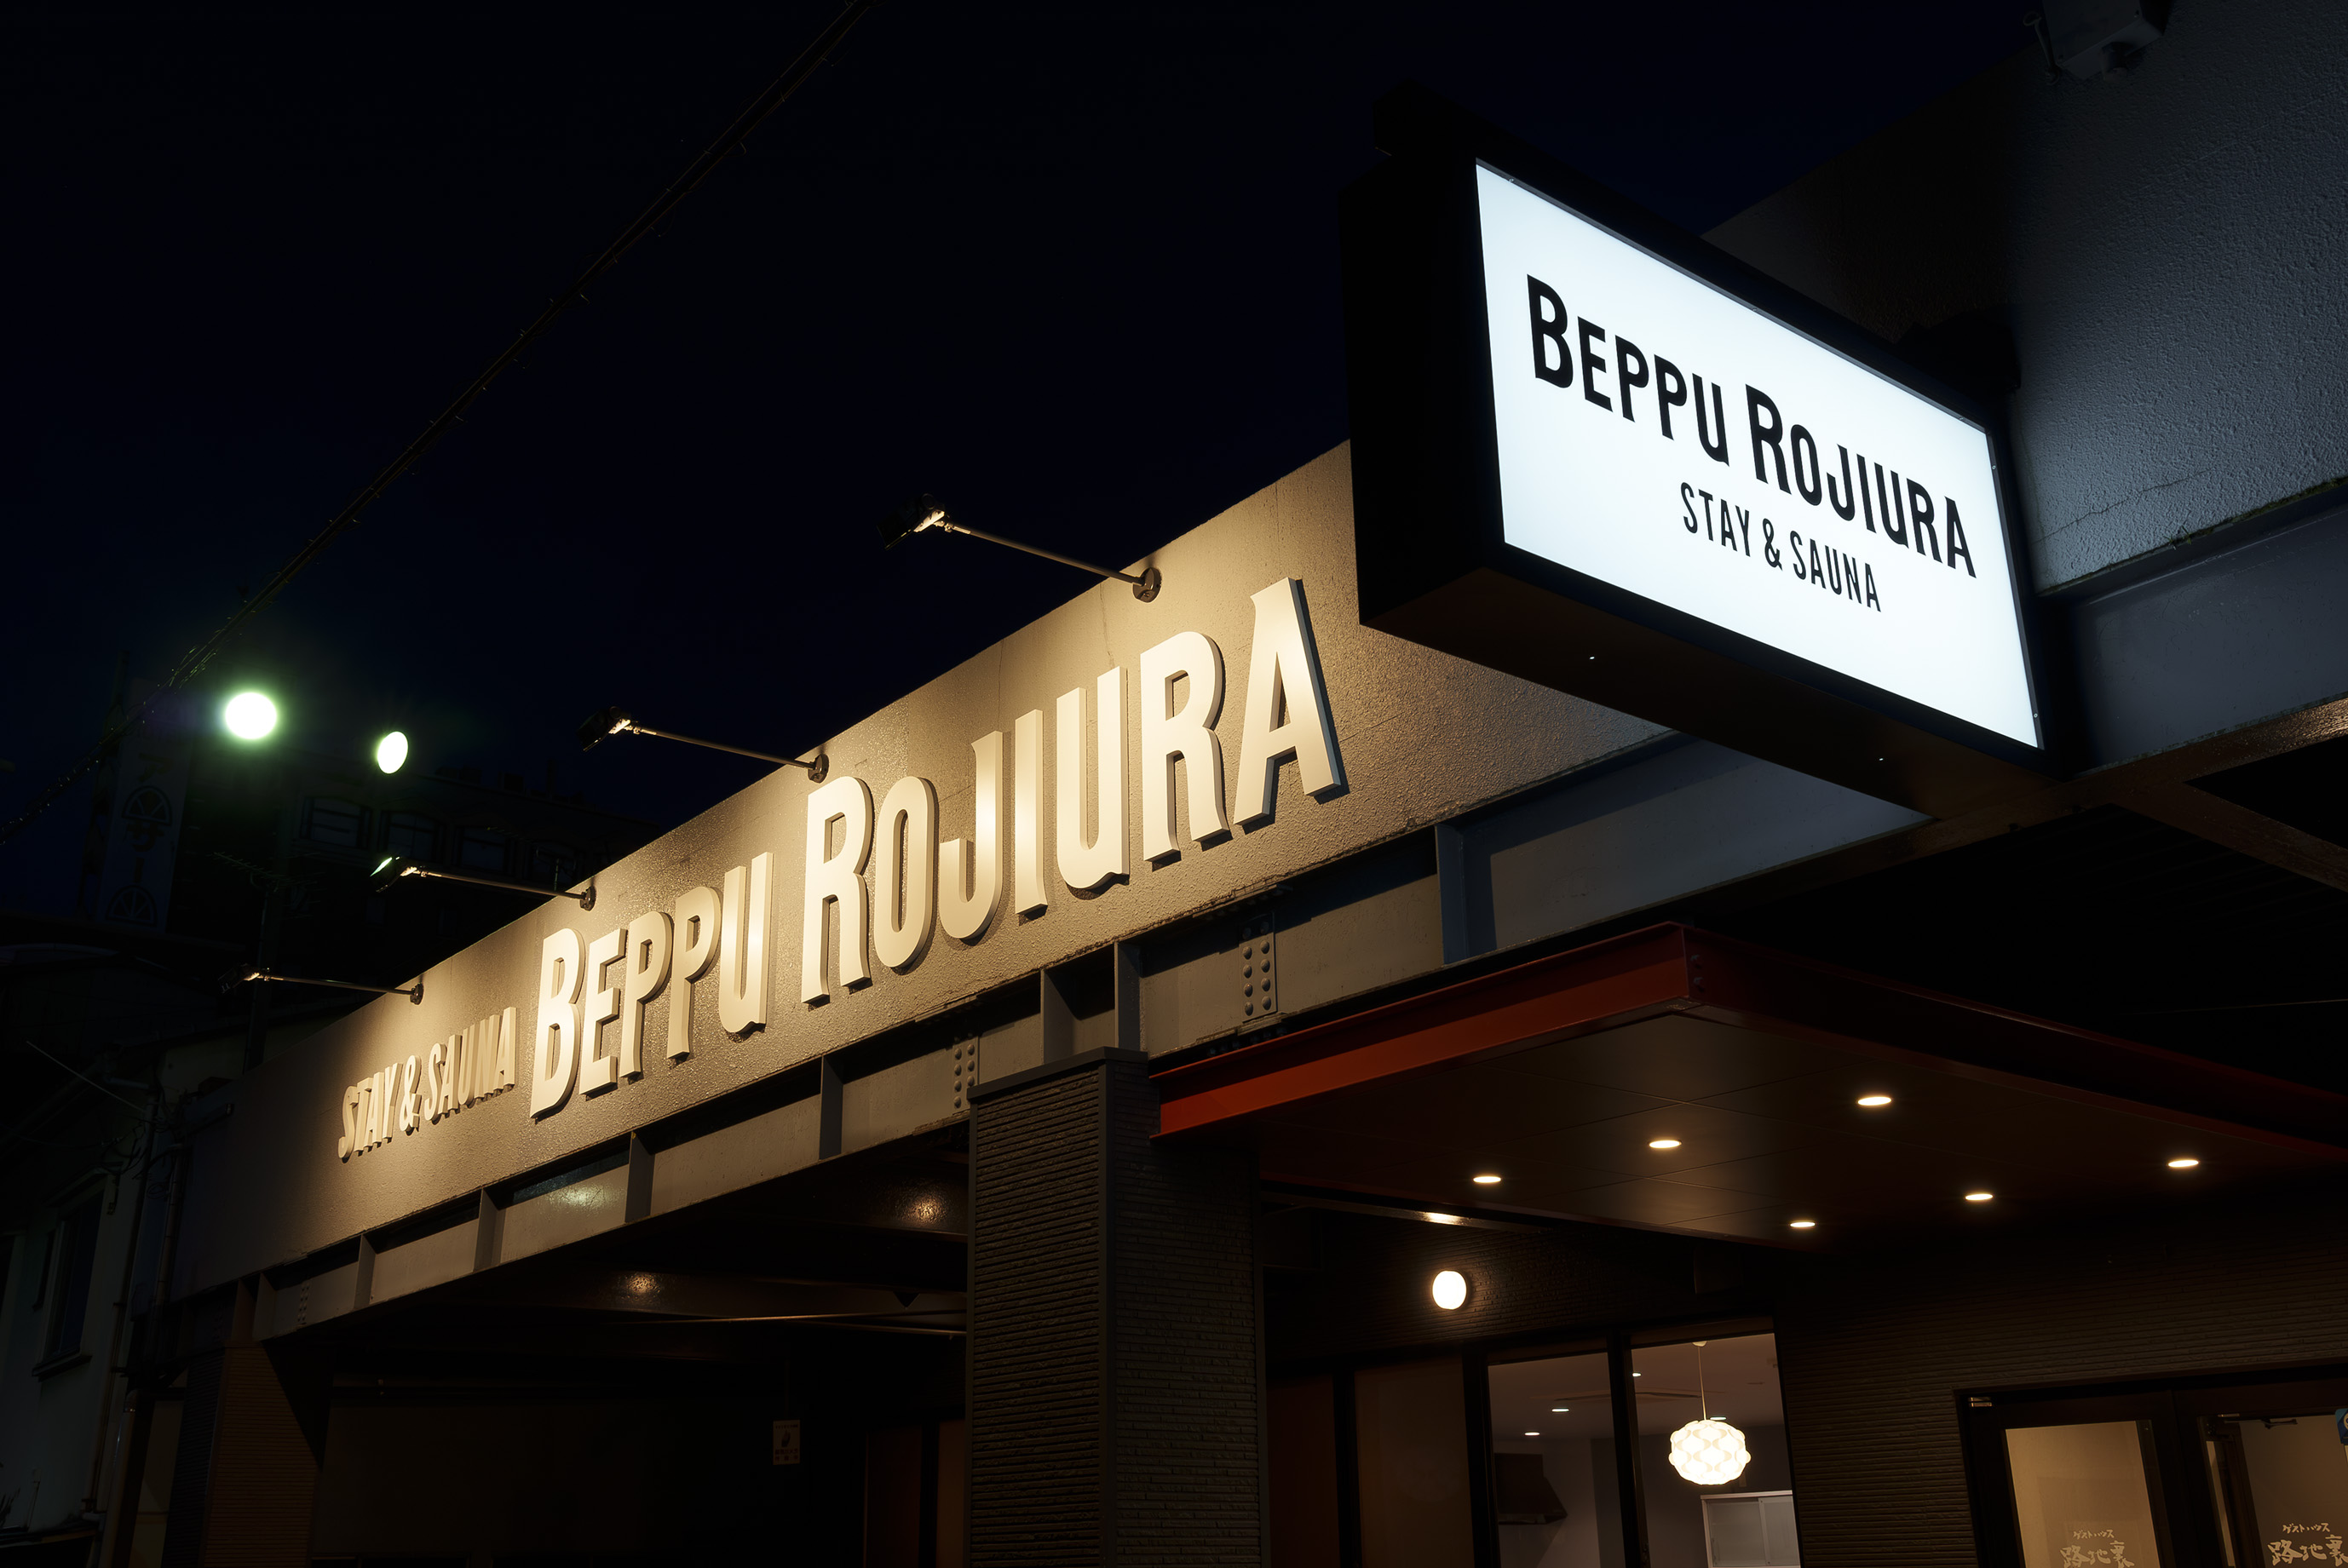 Beppu Rojiura Stay & Sauna